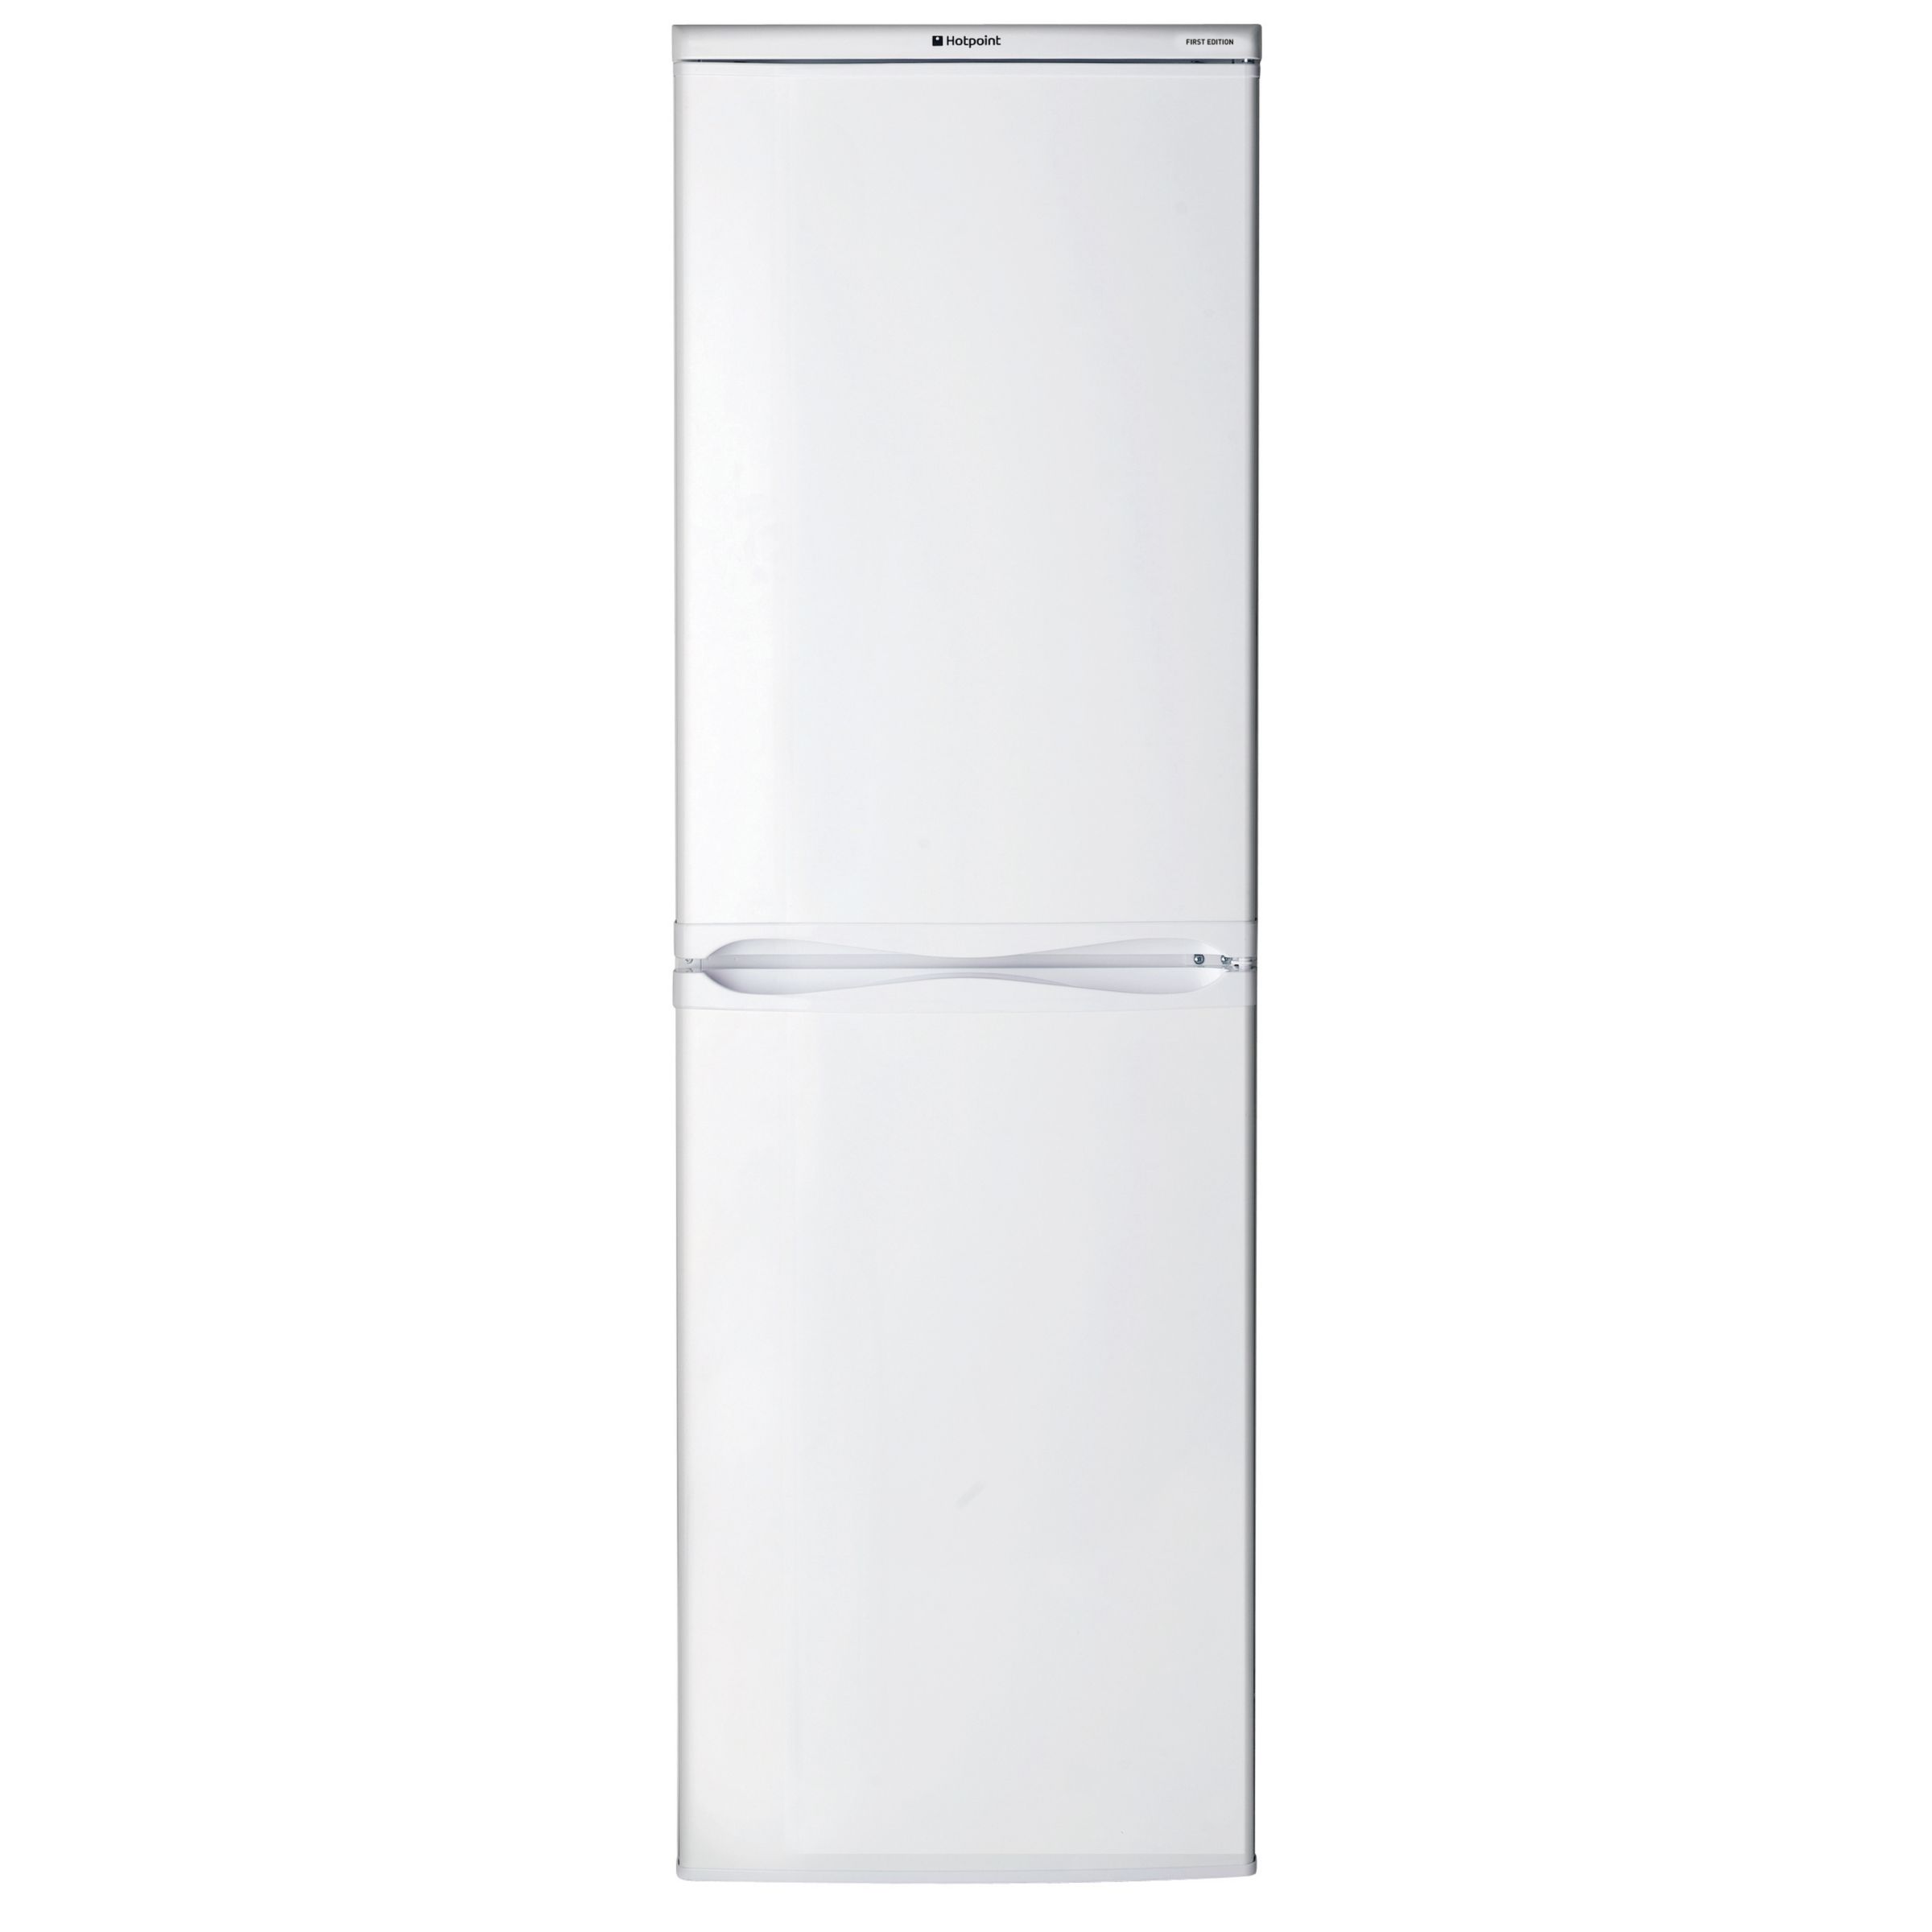 Hotpoint RFAA52P Freestanding Fridge Freezer, A+ Energy Rating, 55cm Wide in White